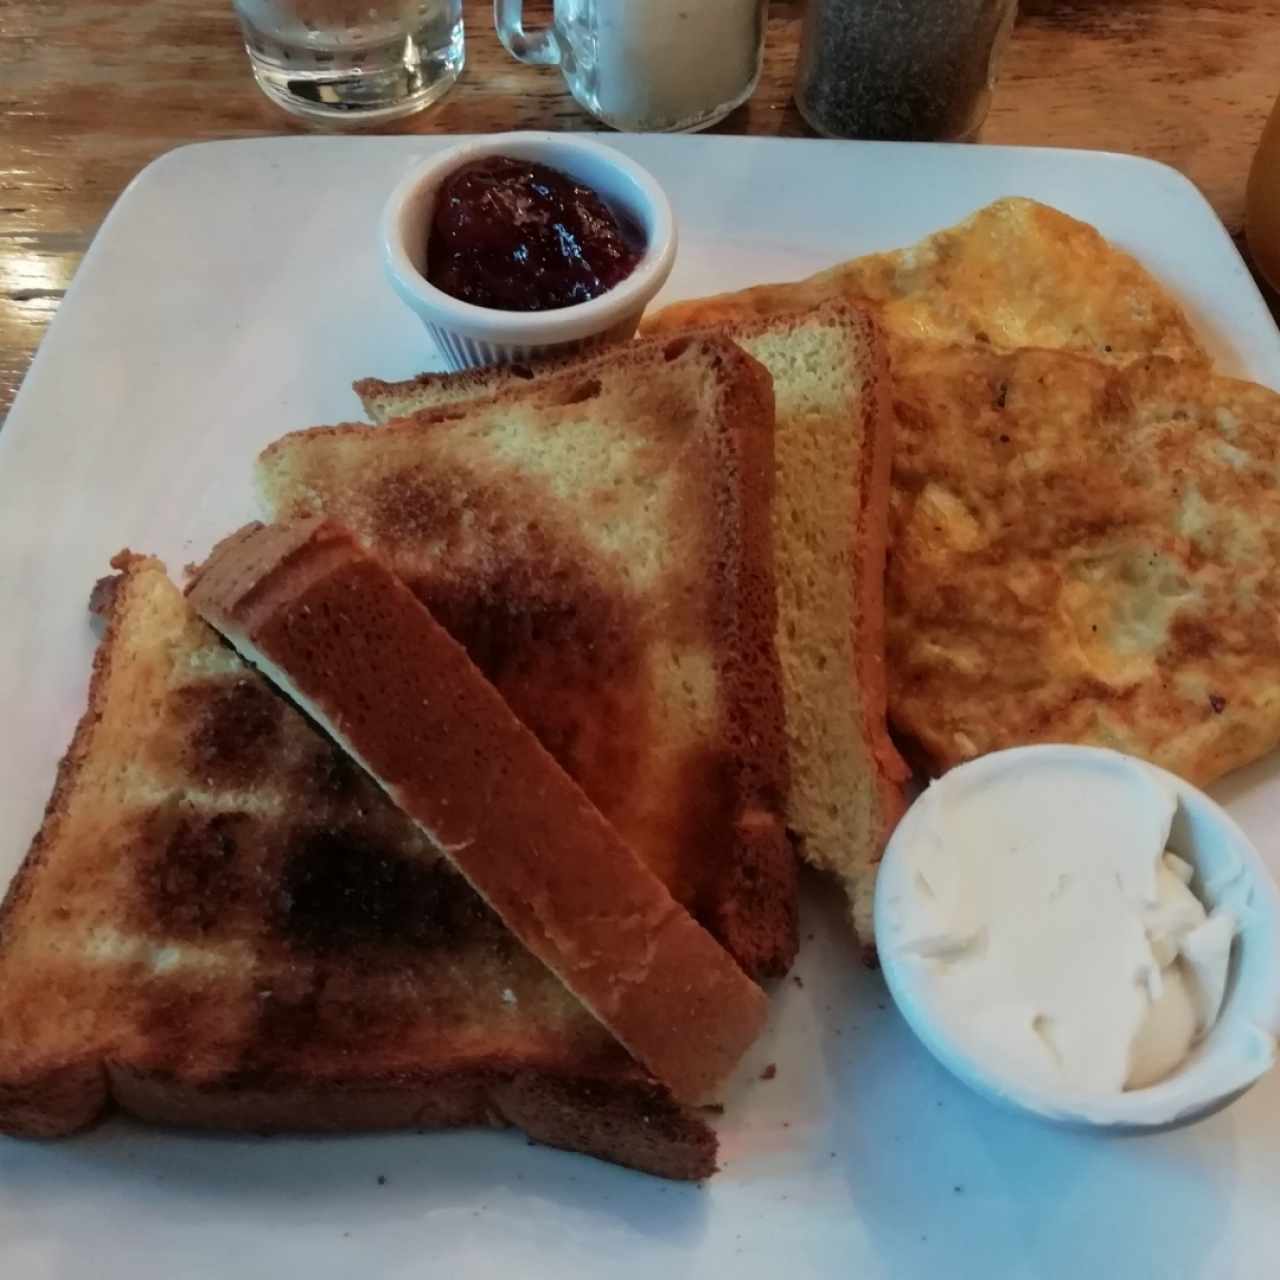 omelette con pan, mermelada y queso crema